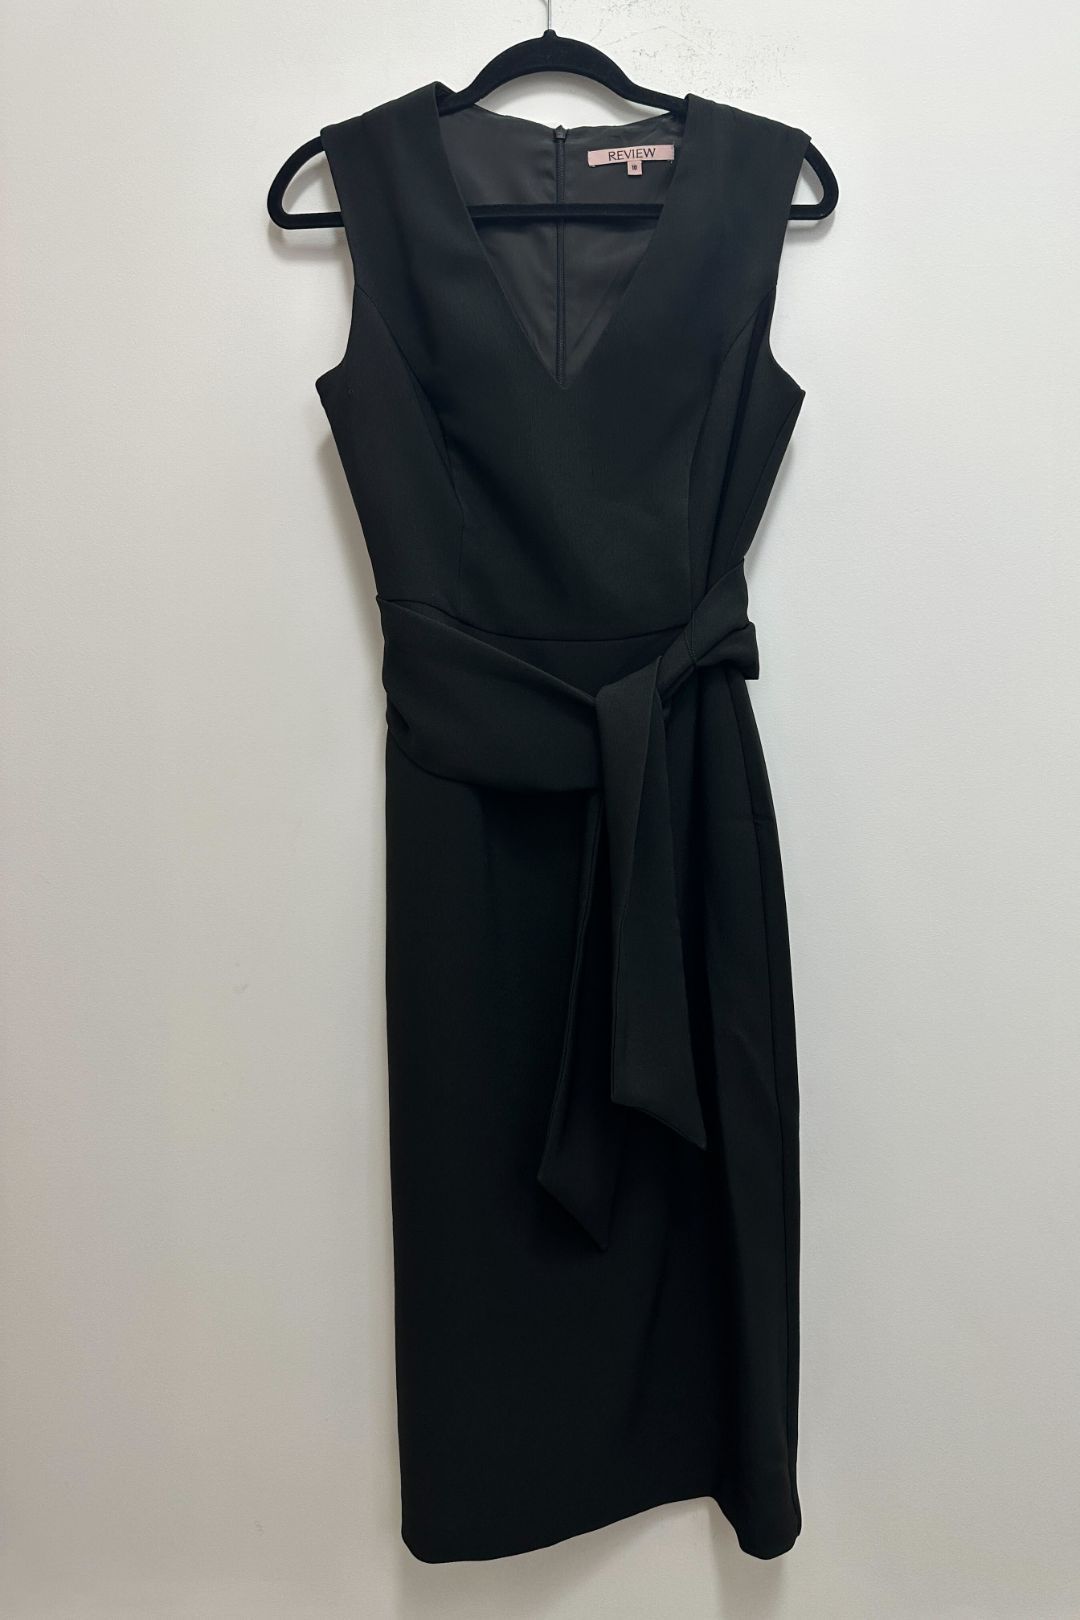 Review Classic Sleeveless Black Dress